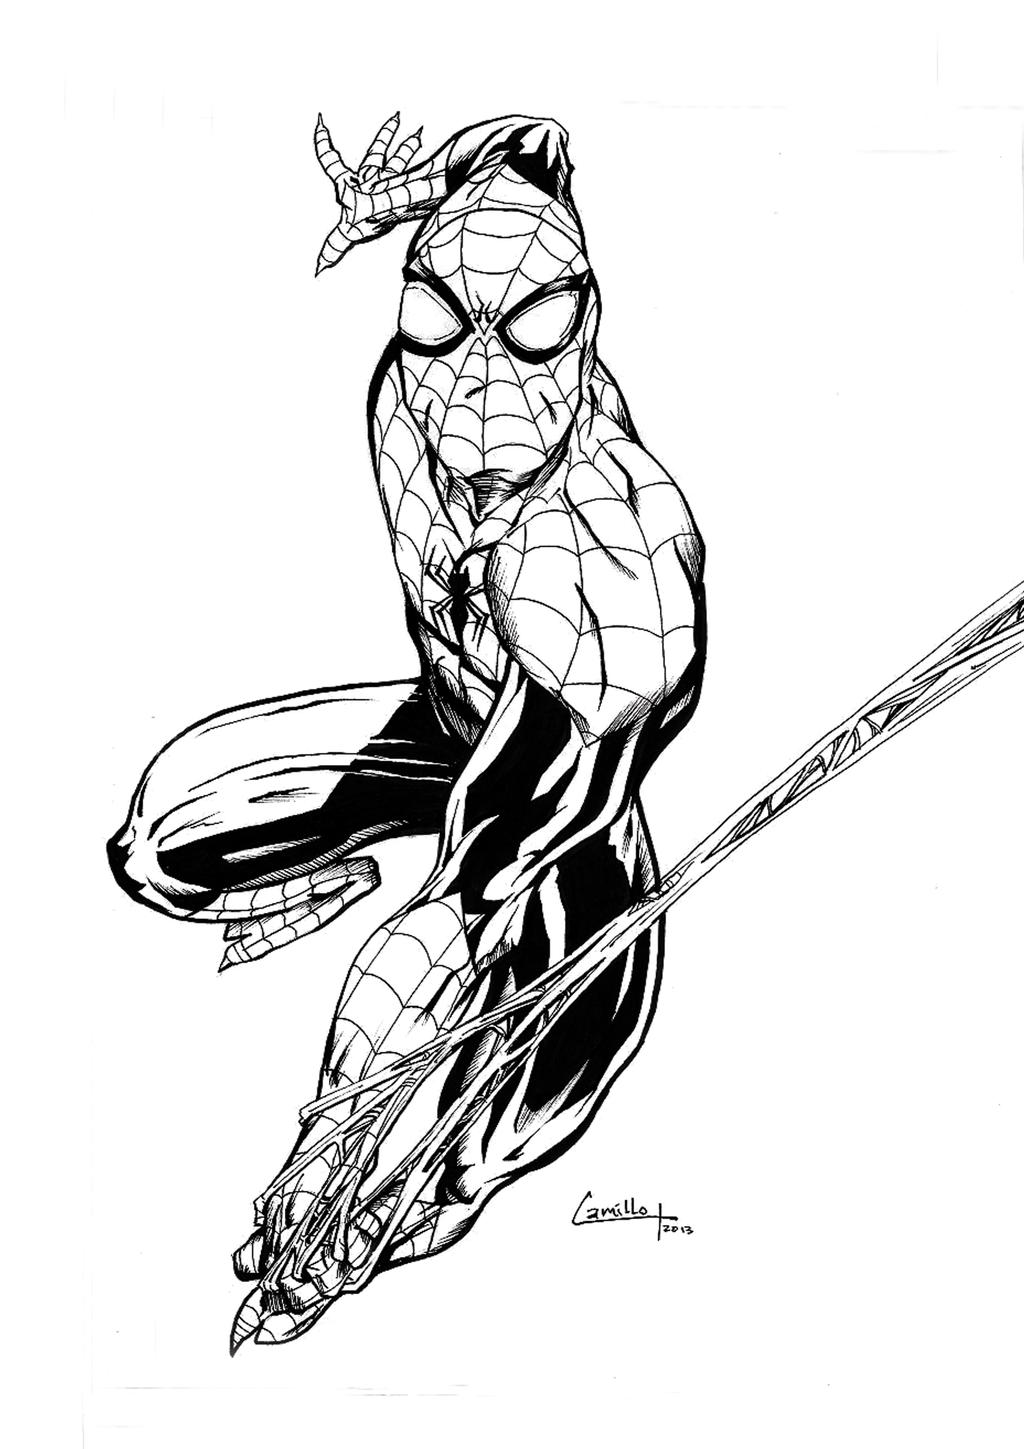 Superior Spiderman Inks By Camillo1988 On Deviantart